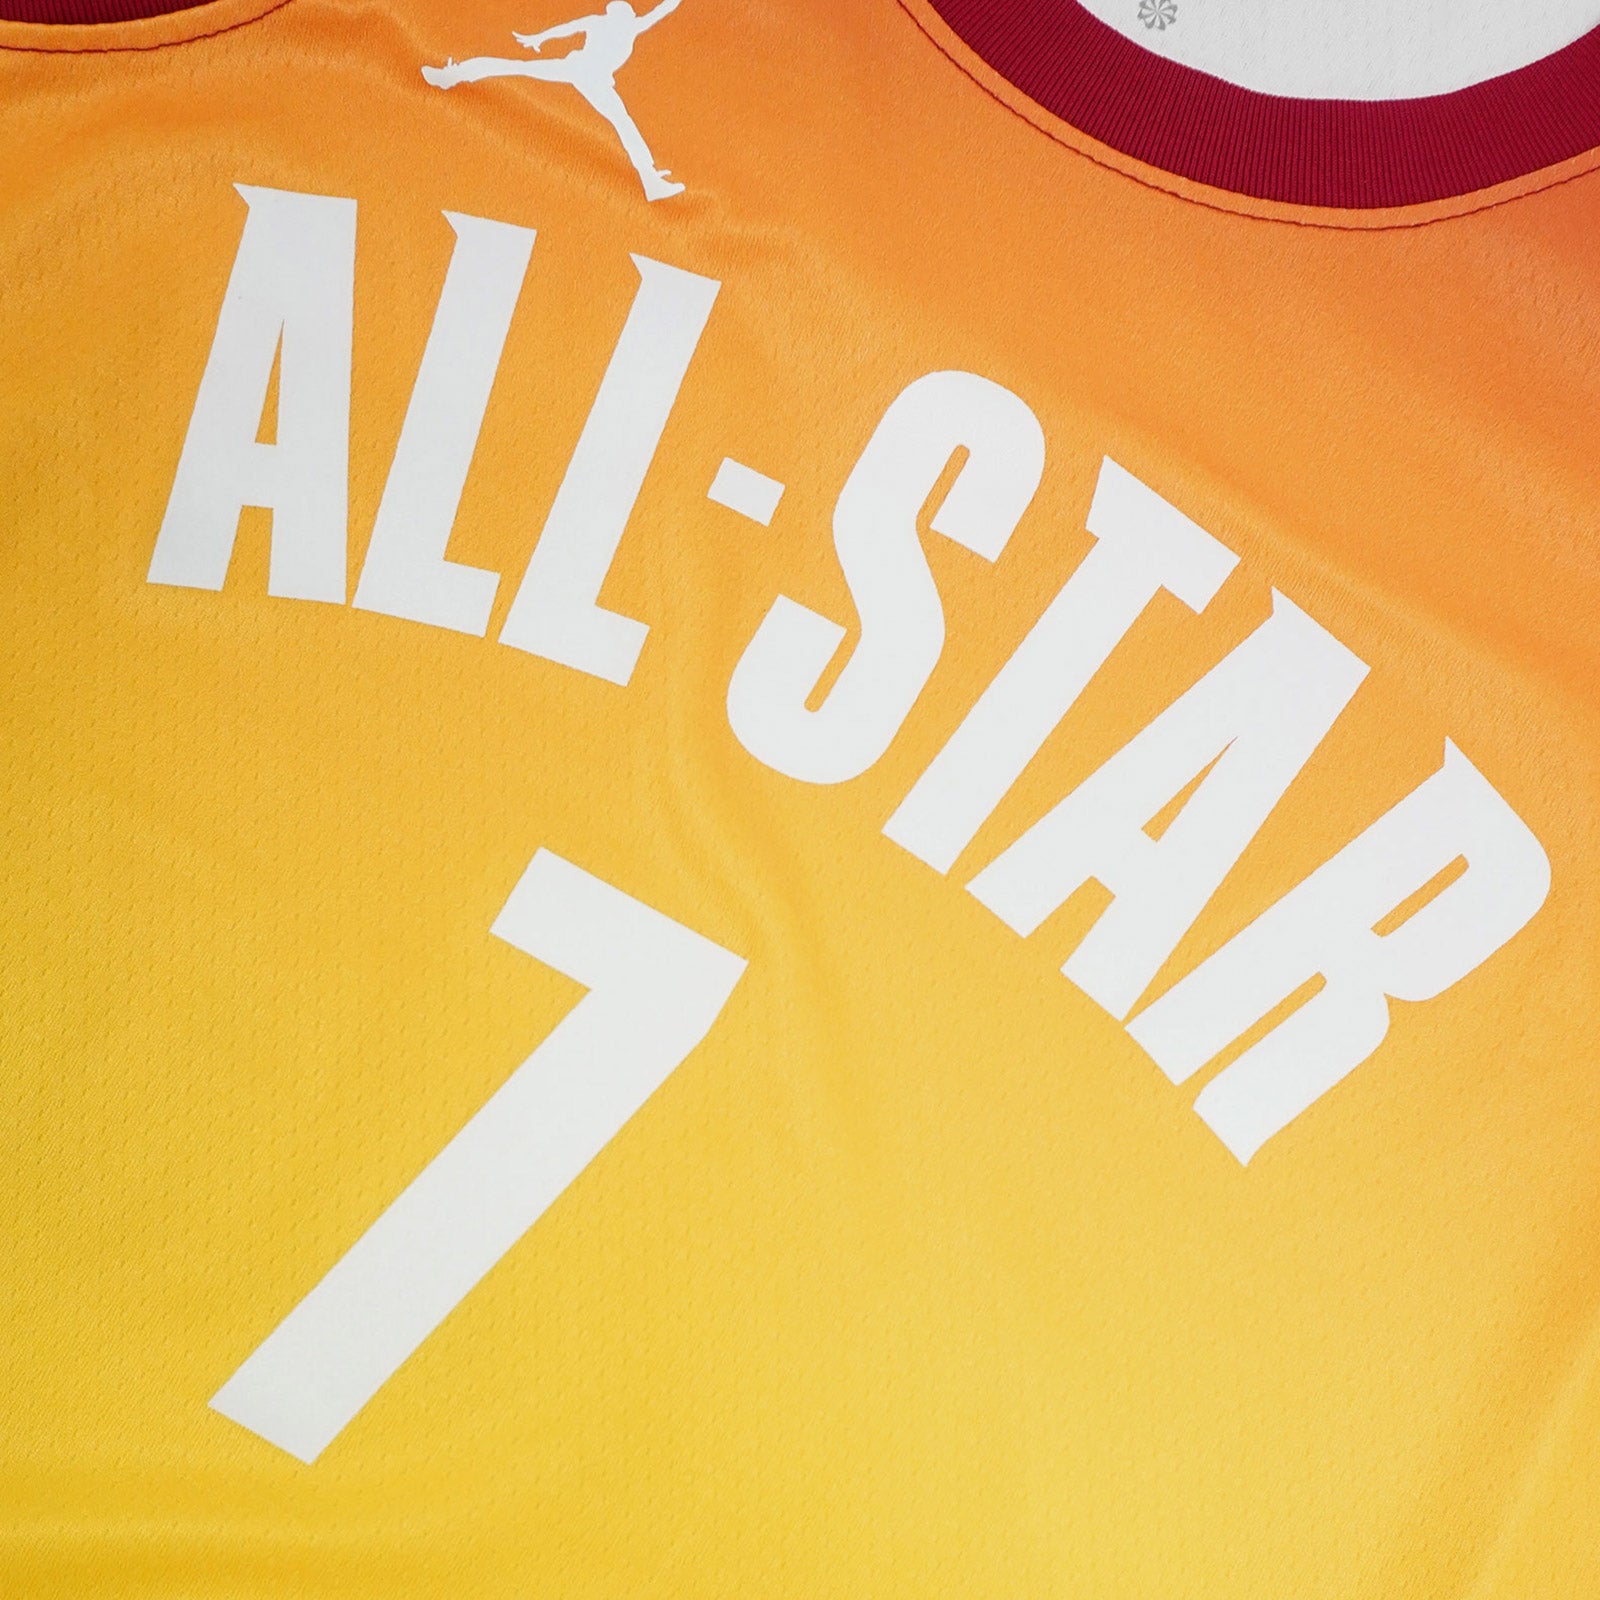 Men's Jordan Brand Ja Morant Orange 2023 NBA All-Star Game Swingman Jersey